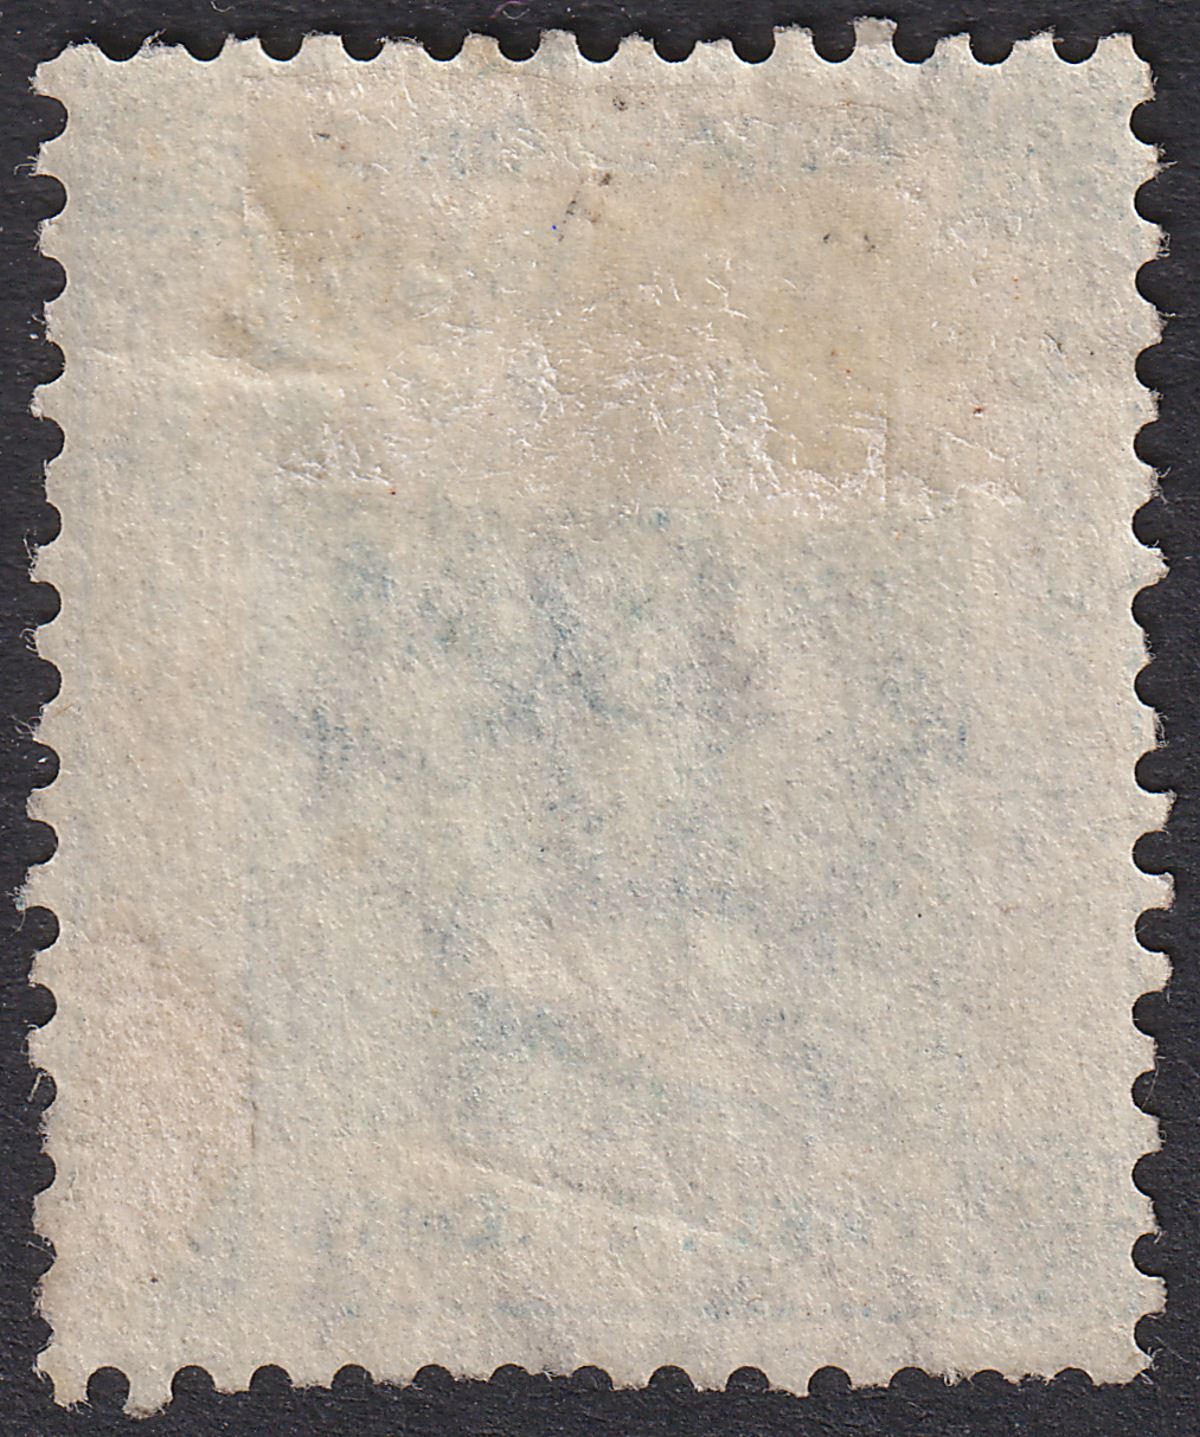 Hong Kong 1865 QV 12c Pale Greenish Blue Unused SG12 cat £1100 as mint